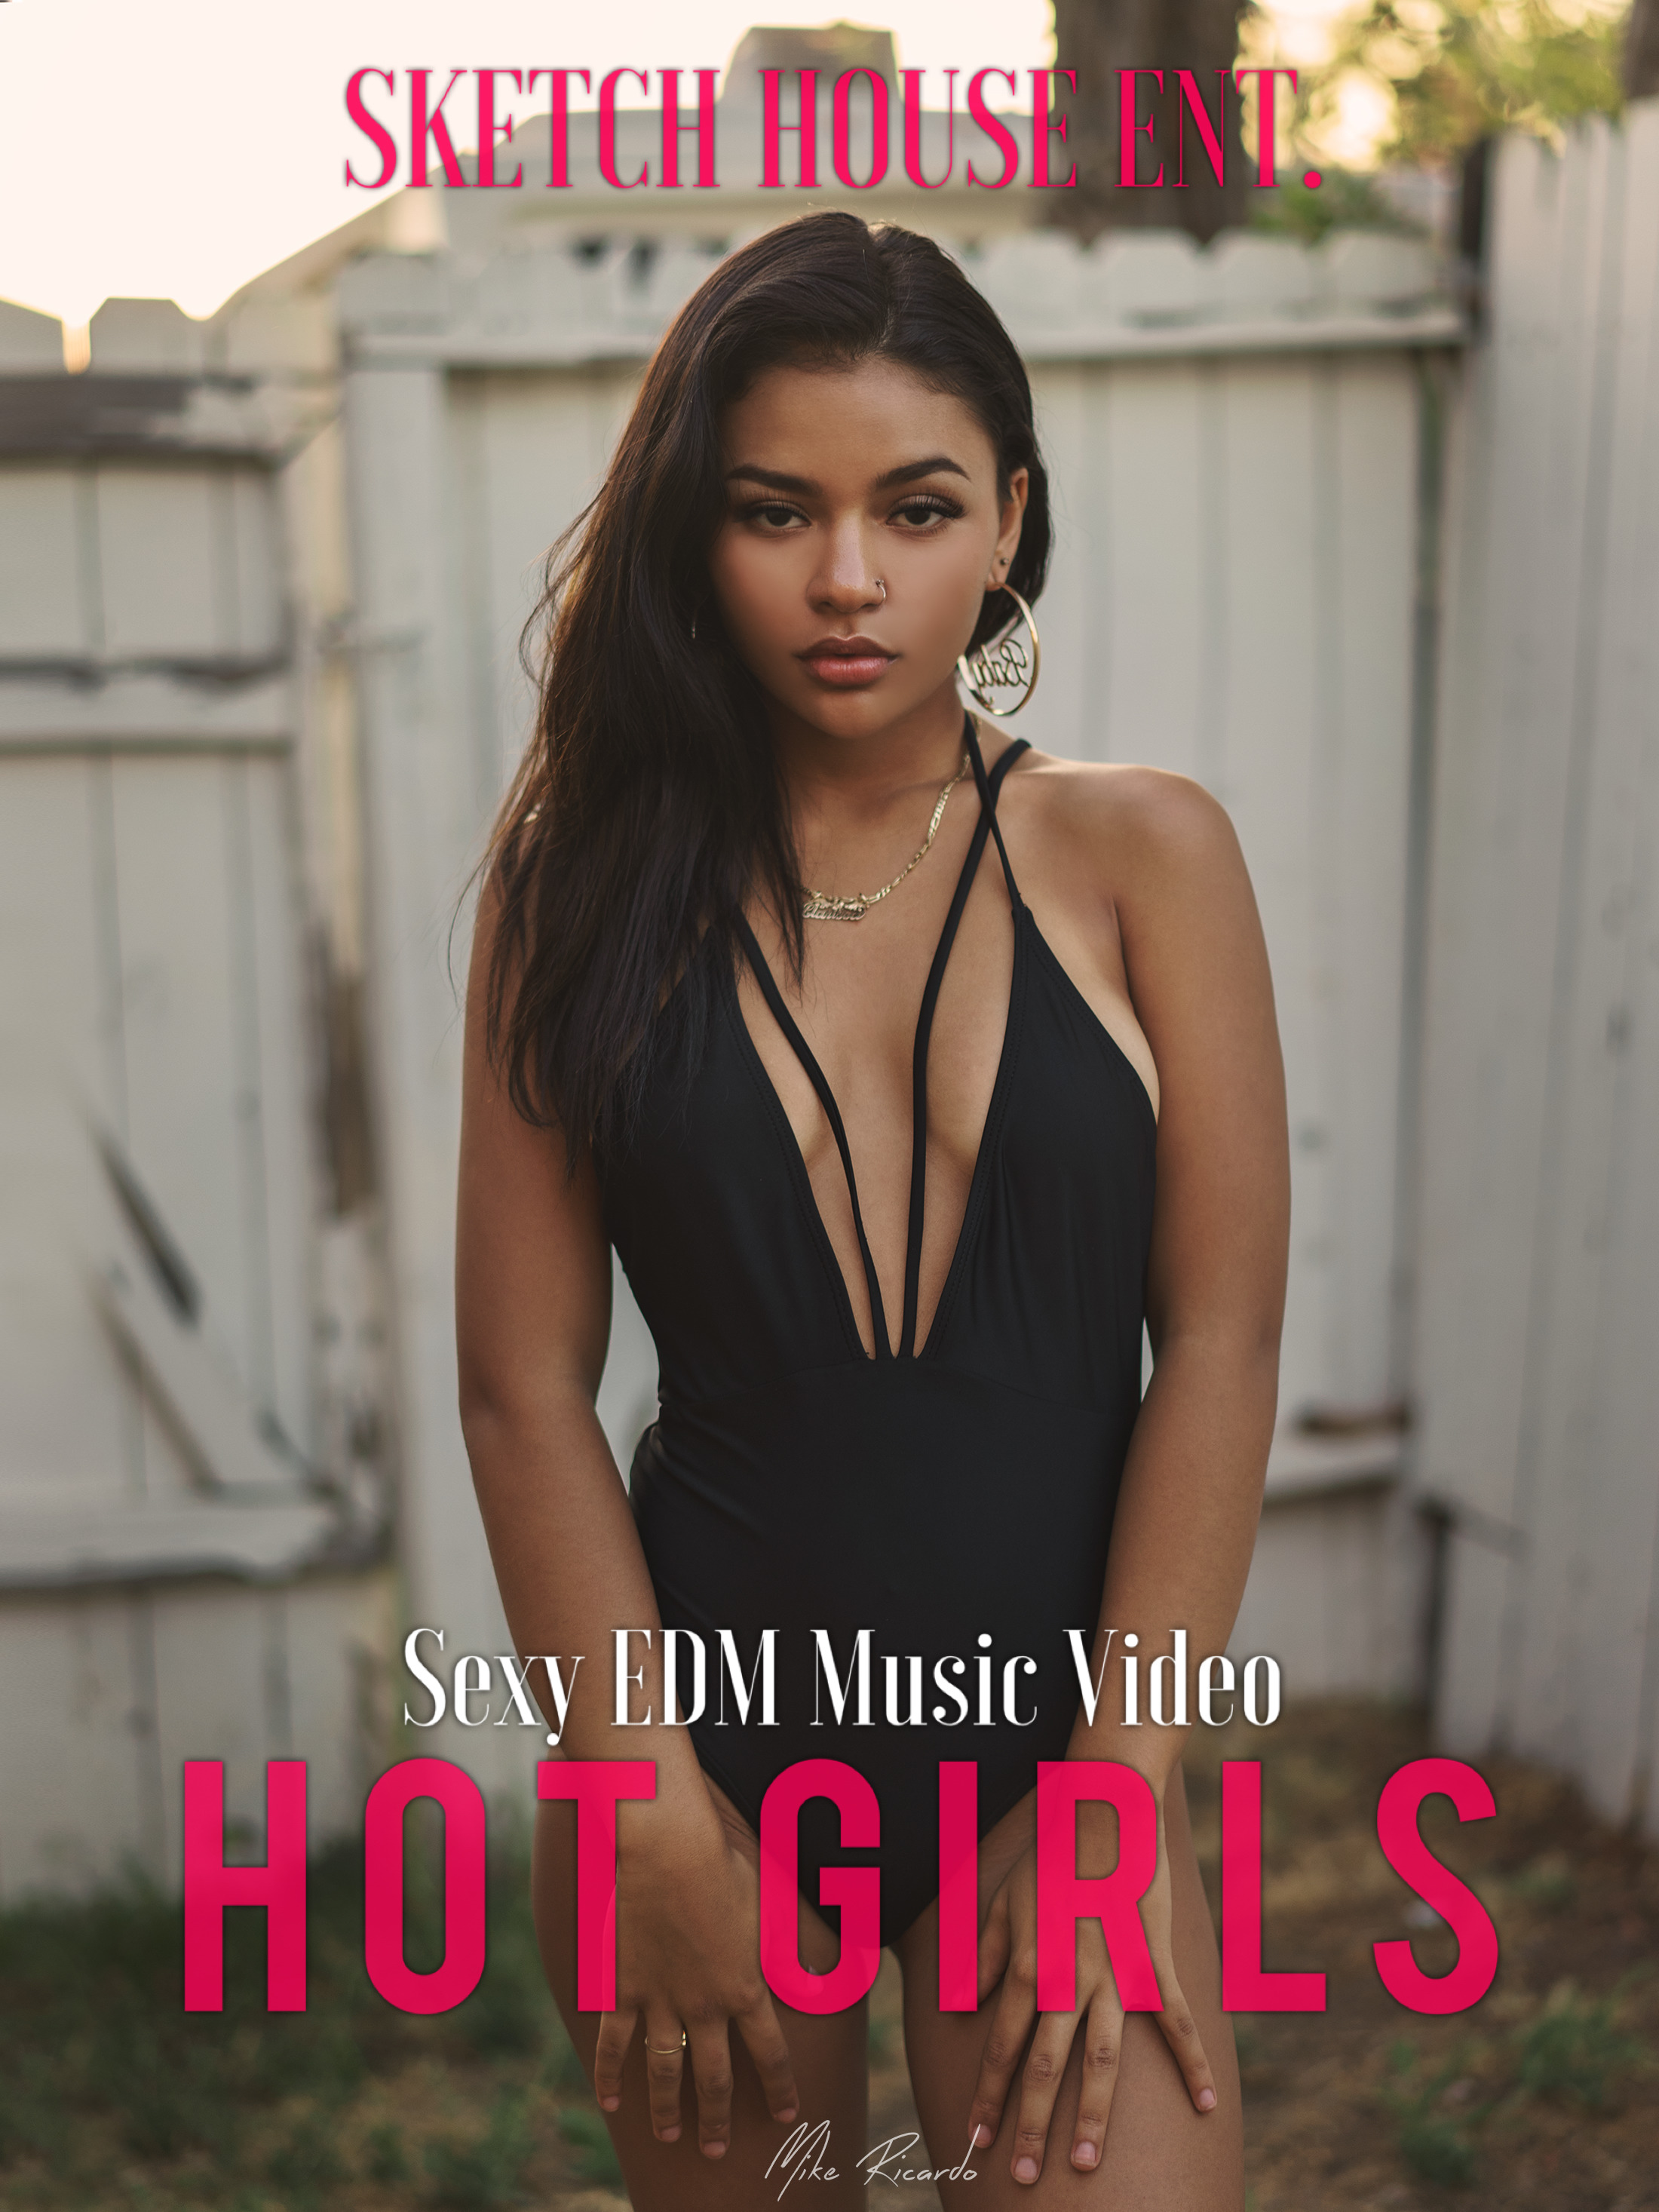 Watch Hot Girls Sexy EDM Music Video | Prime Video